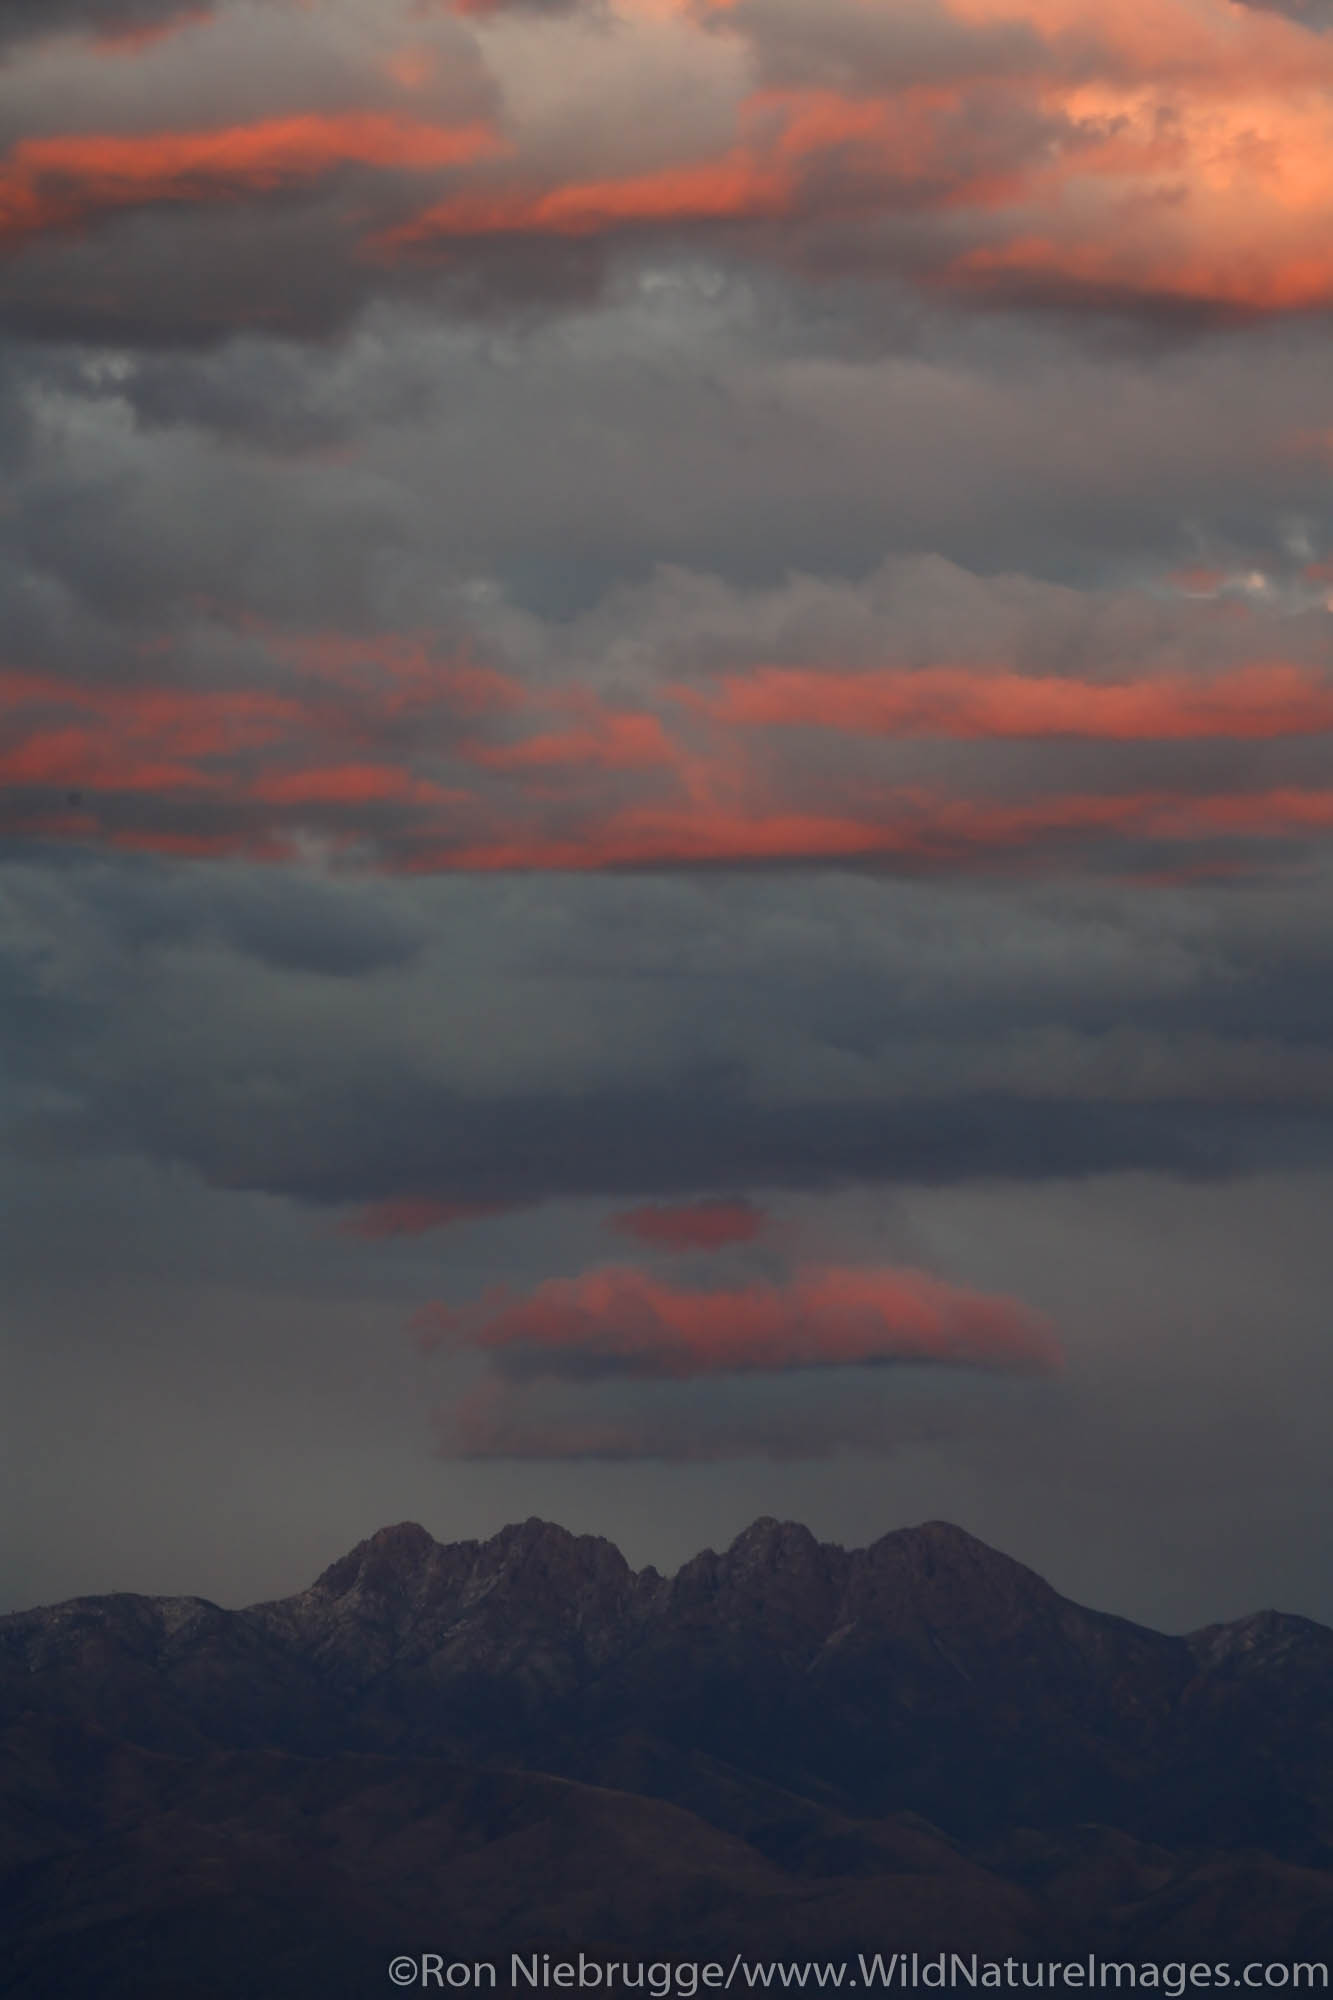 Four Peaks at sunset from Fountain Hills, near Phoenix, Arizona.